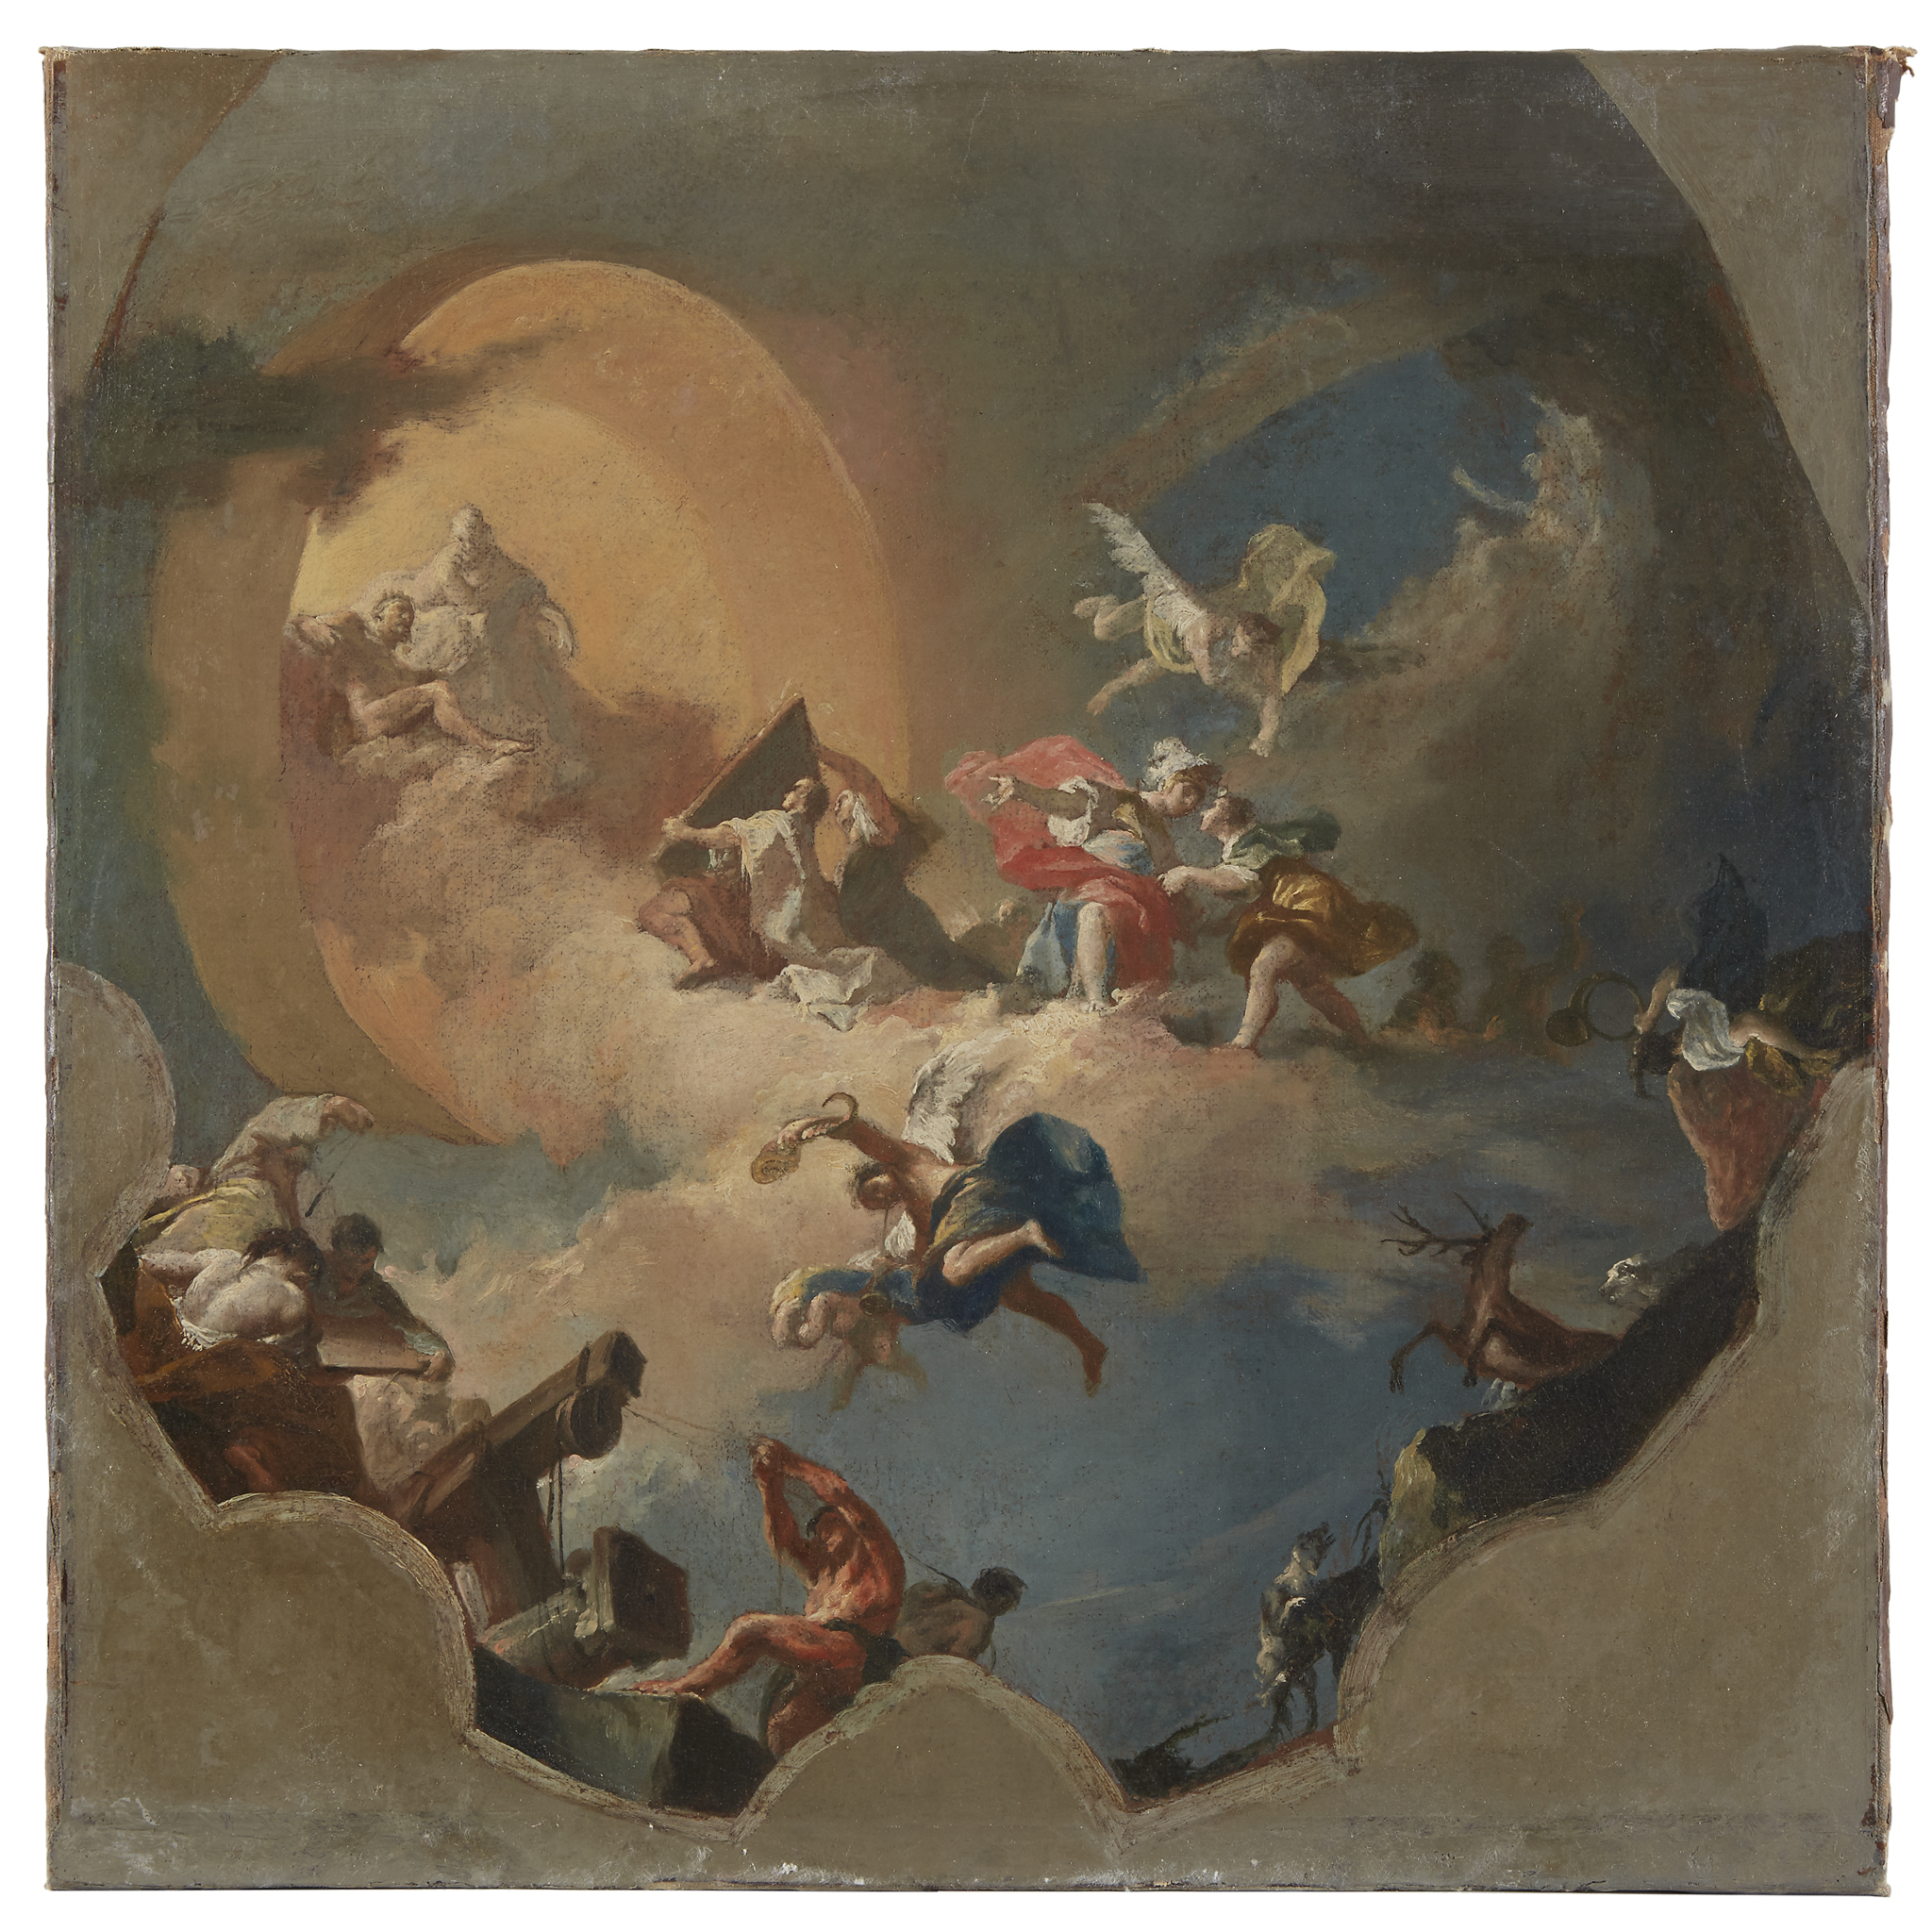 Attributed to Giovanni Battista Tiepolo (Italian, 1696-1770) The Apotheosis of the Arts (A